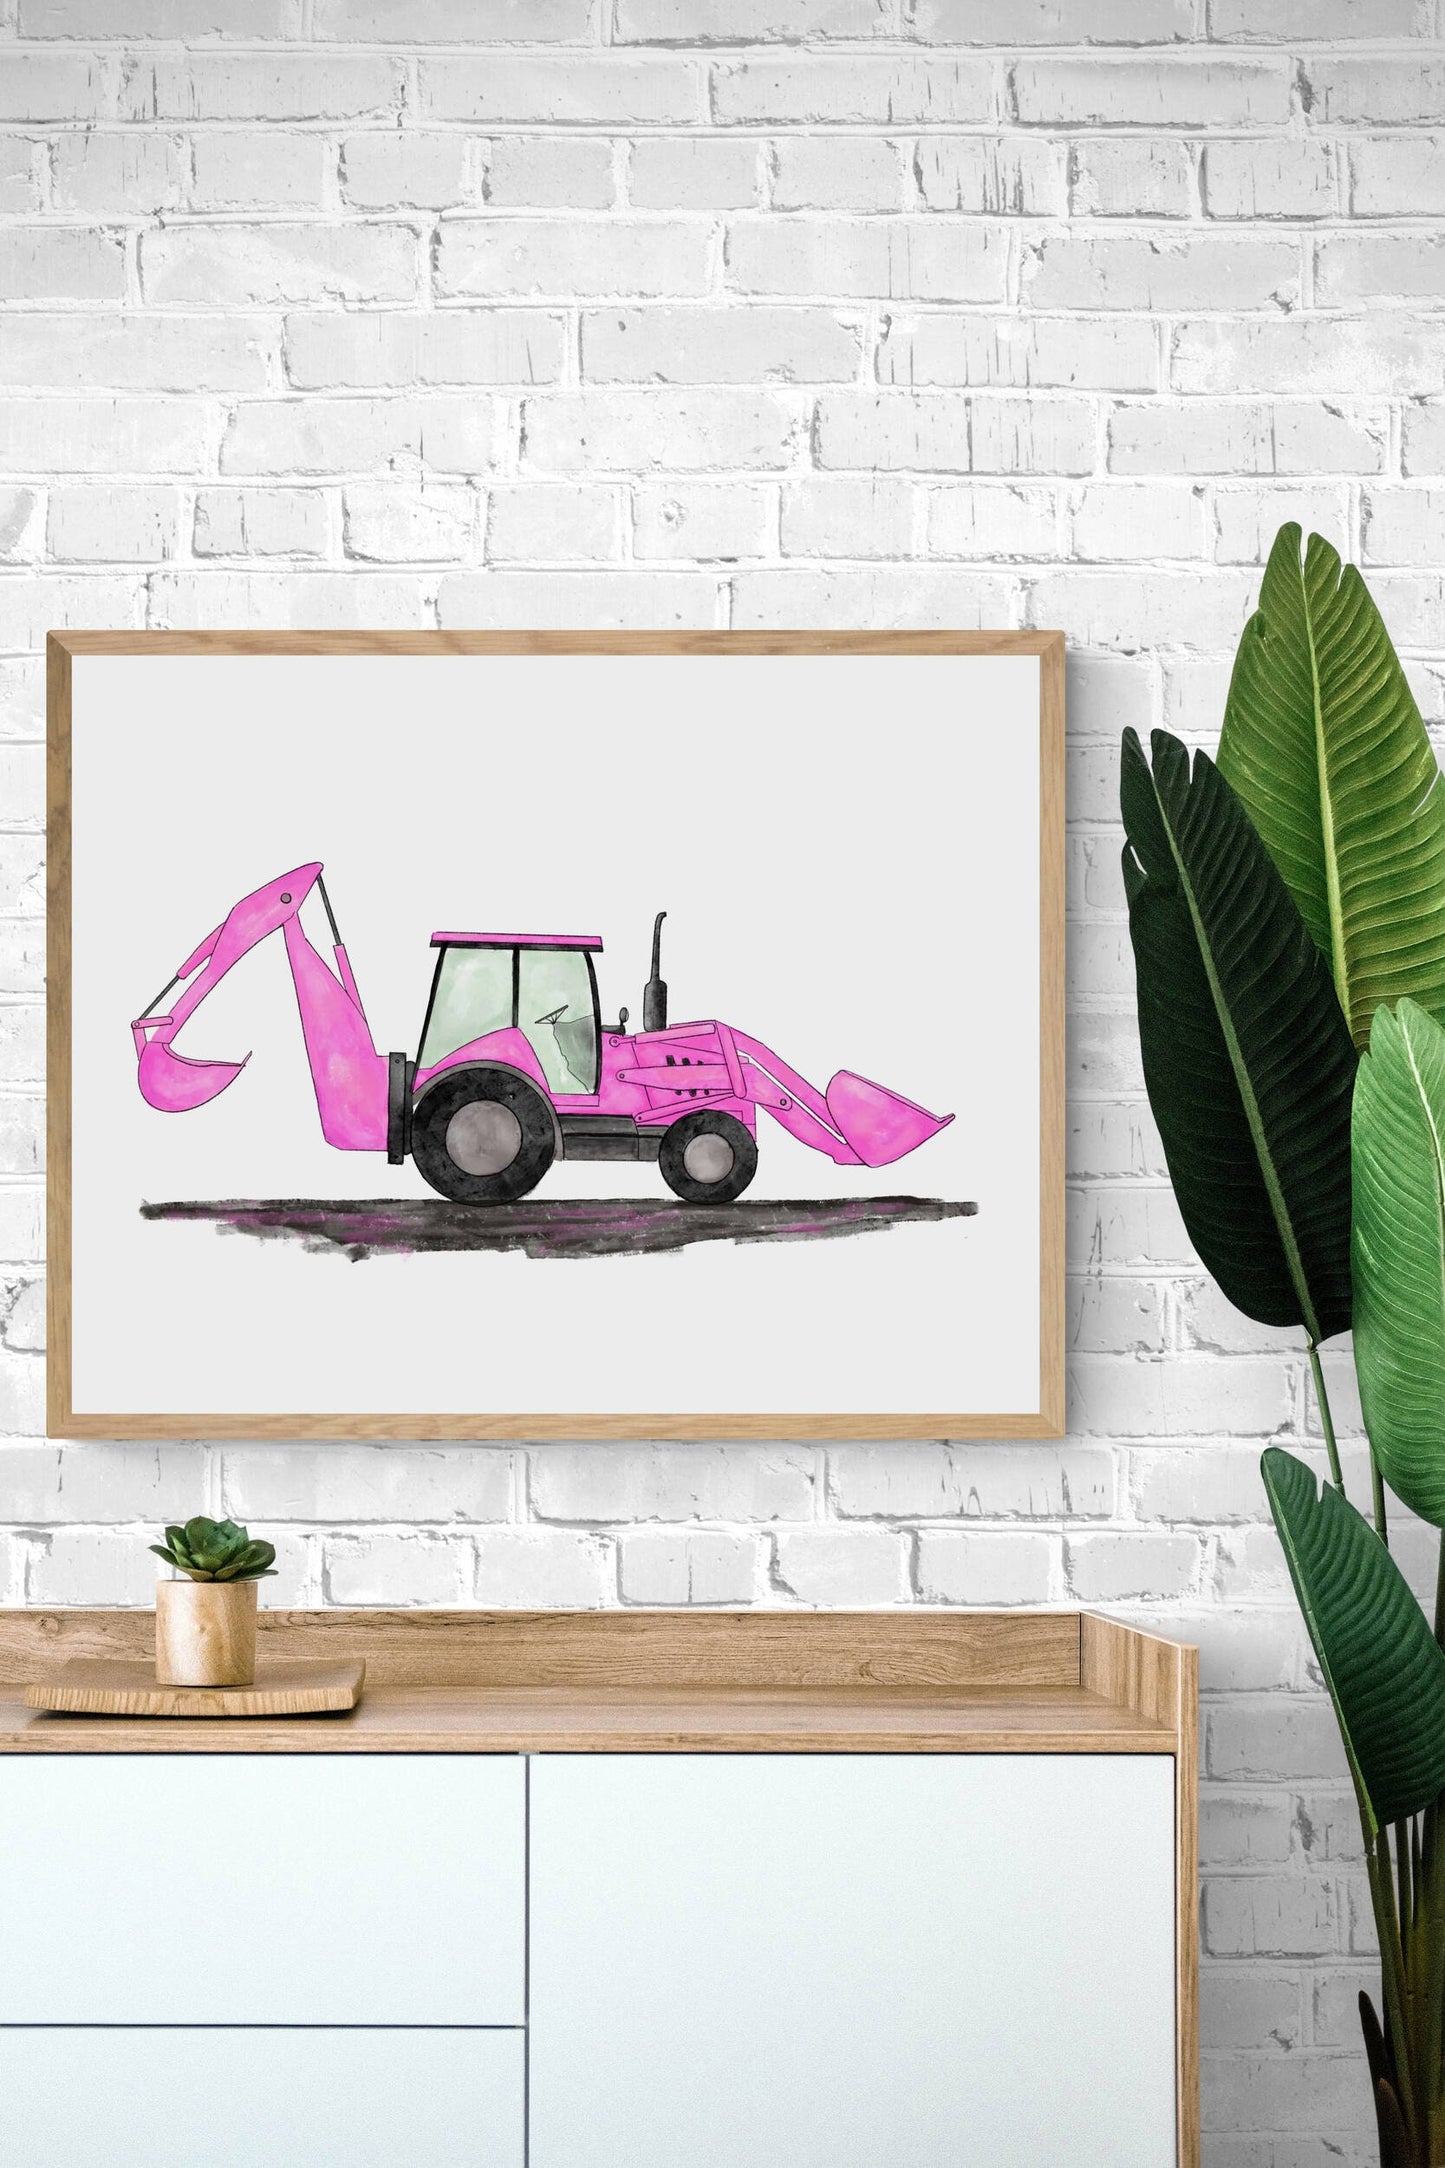 Pink Backhoe Wall Art, Backhoe Loader Painting, Girls Room Construction Print, Construction Vehicles Poster, Nursery Gift, Loader Excavator